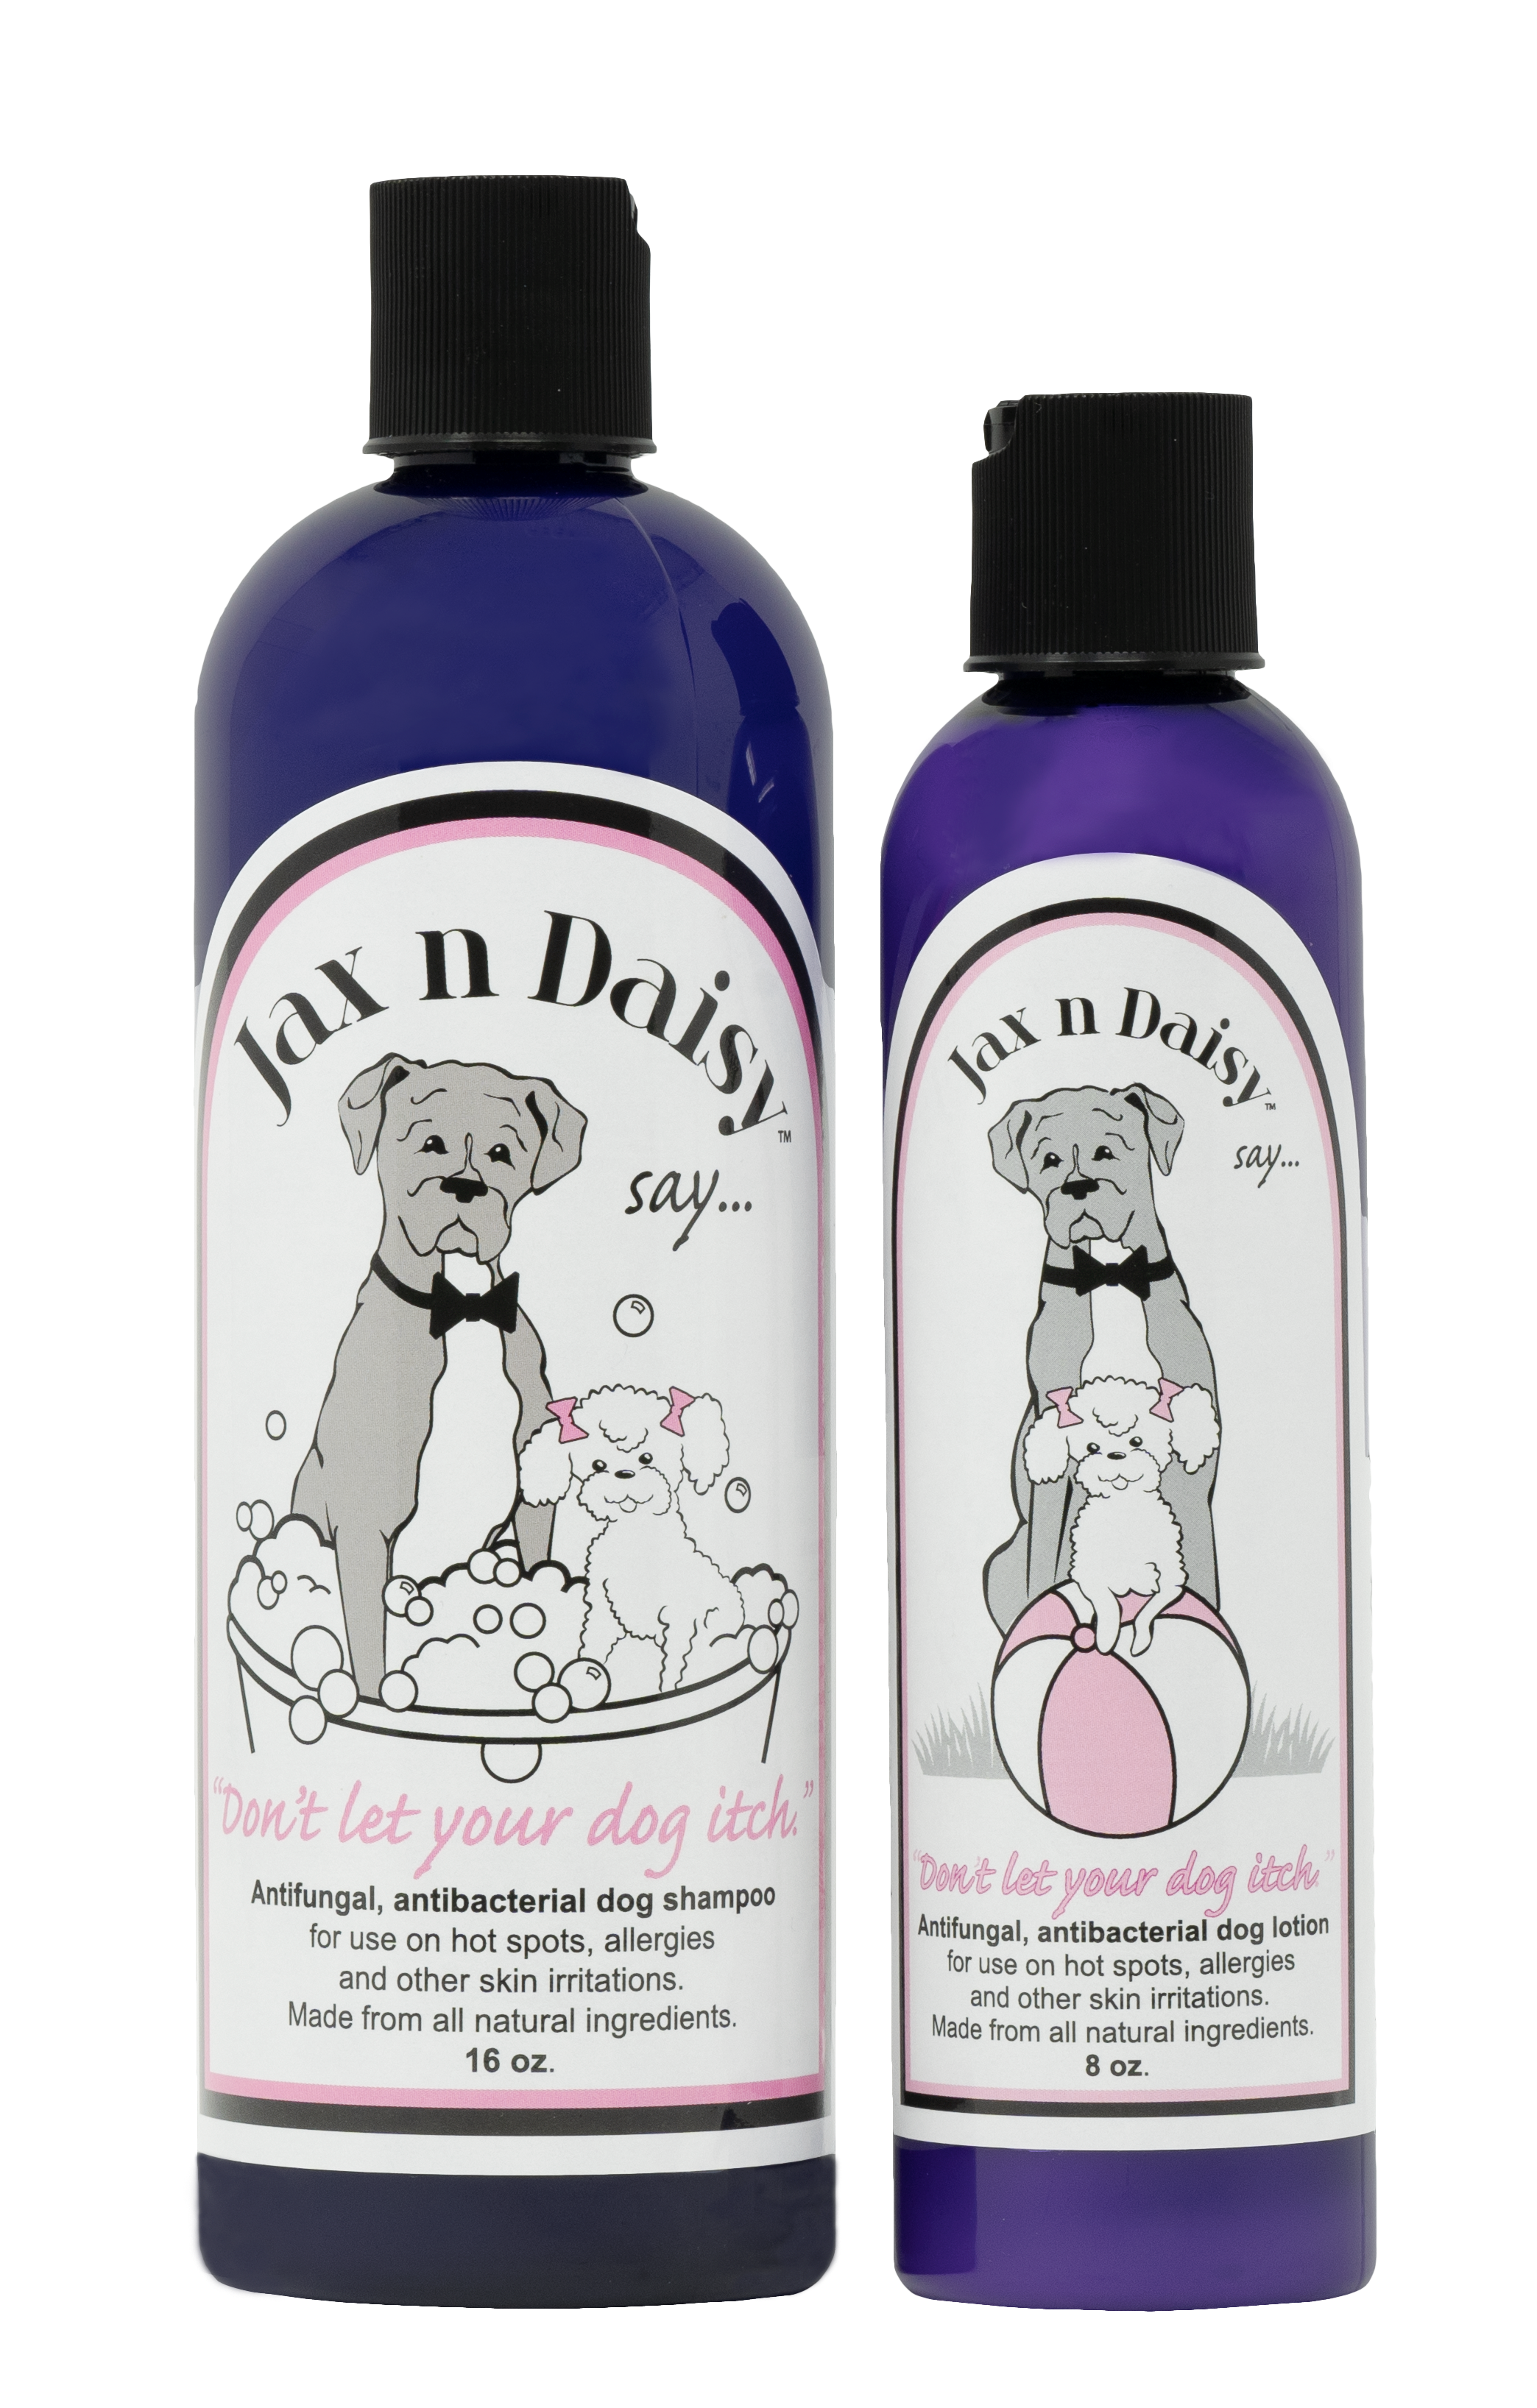 Jax n Daisy Dog Shampoo \u0026 Lotion 2 pack 